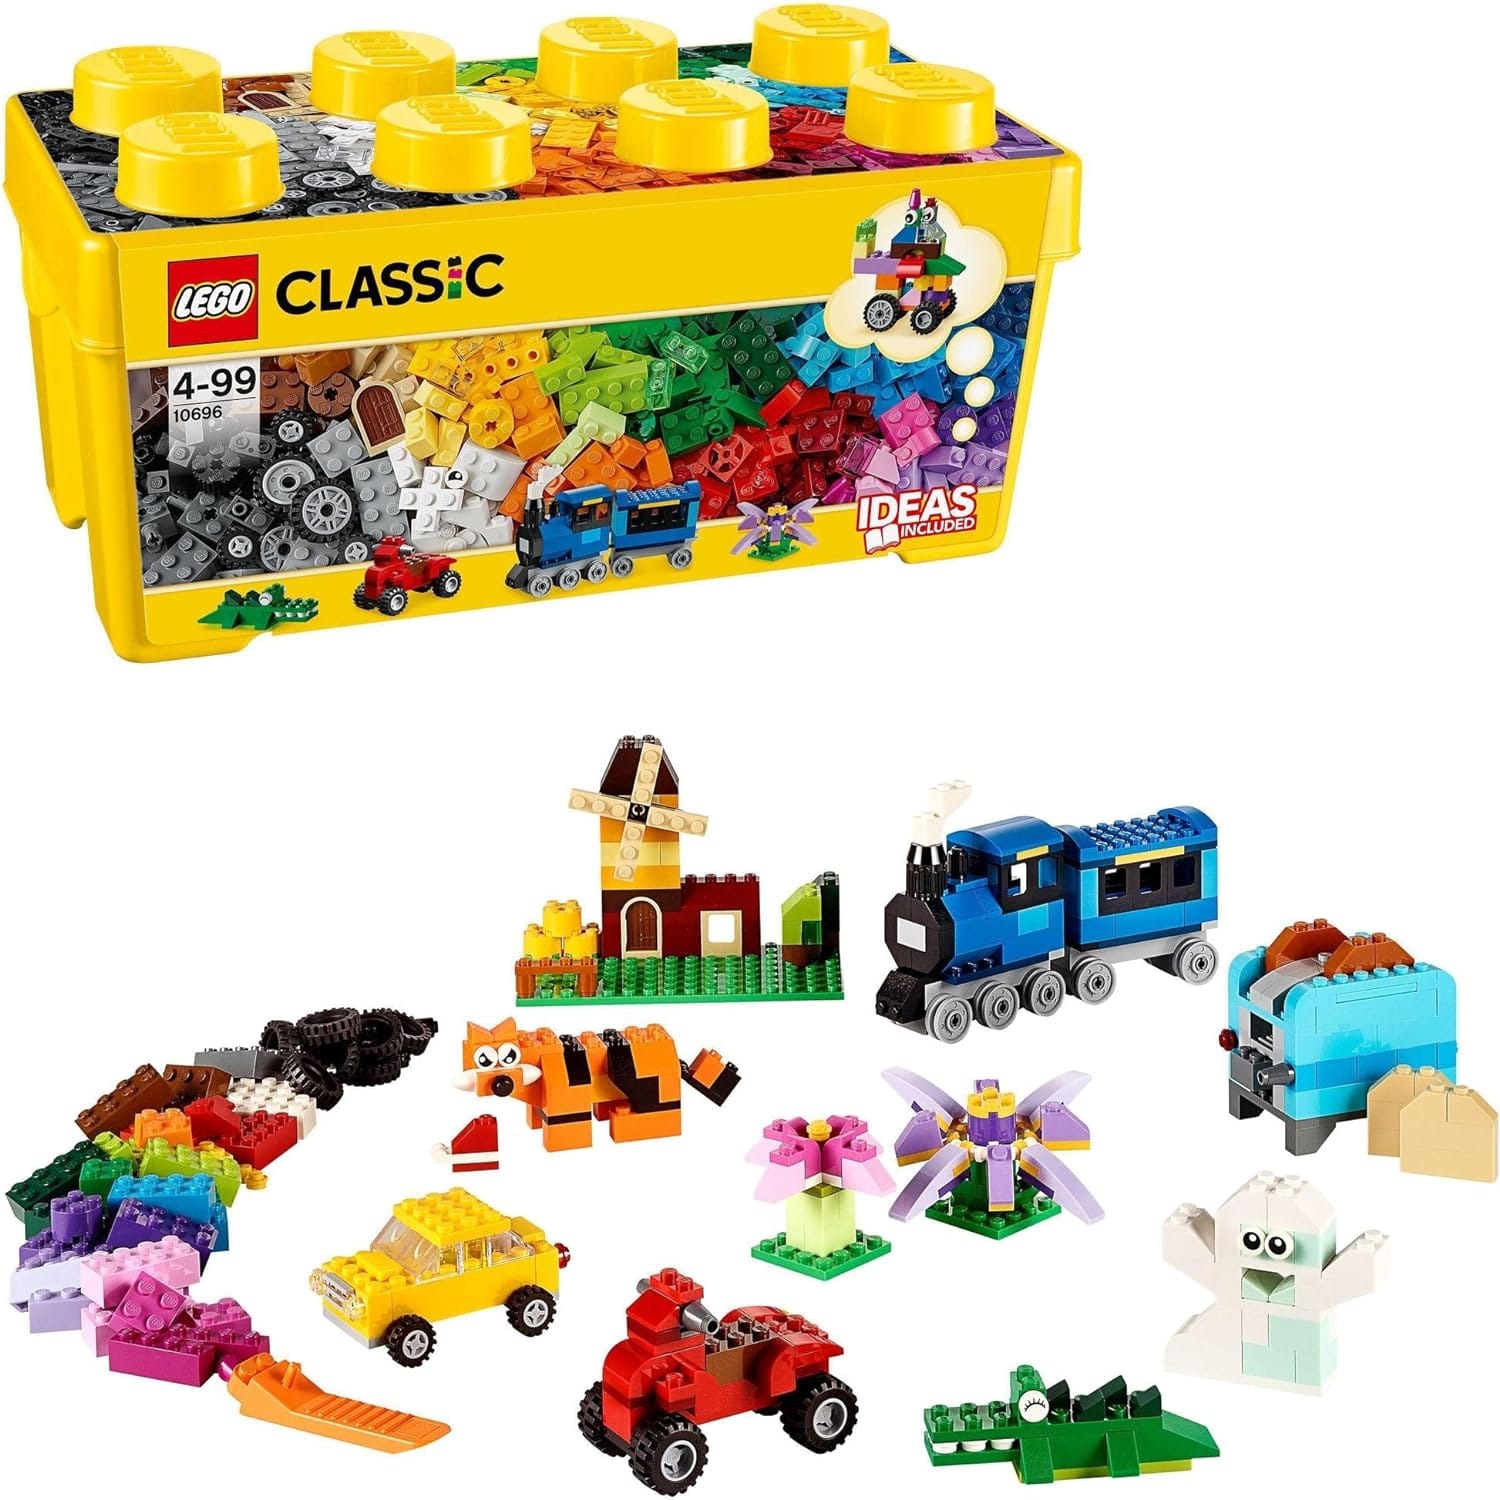 LEGO Brick Box 10696 Toy Set Review